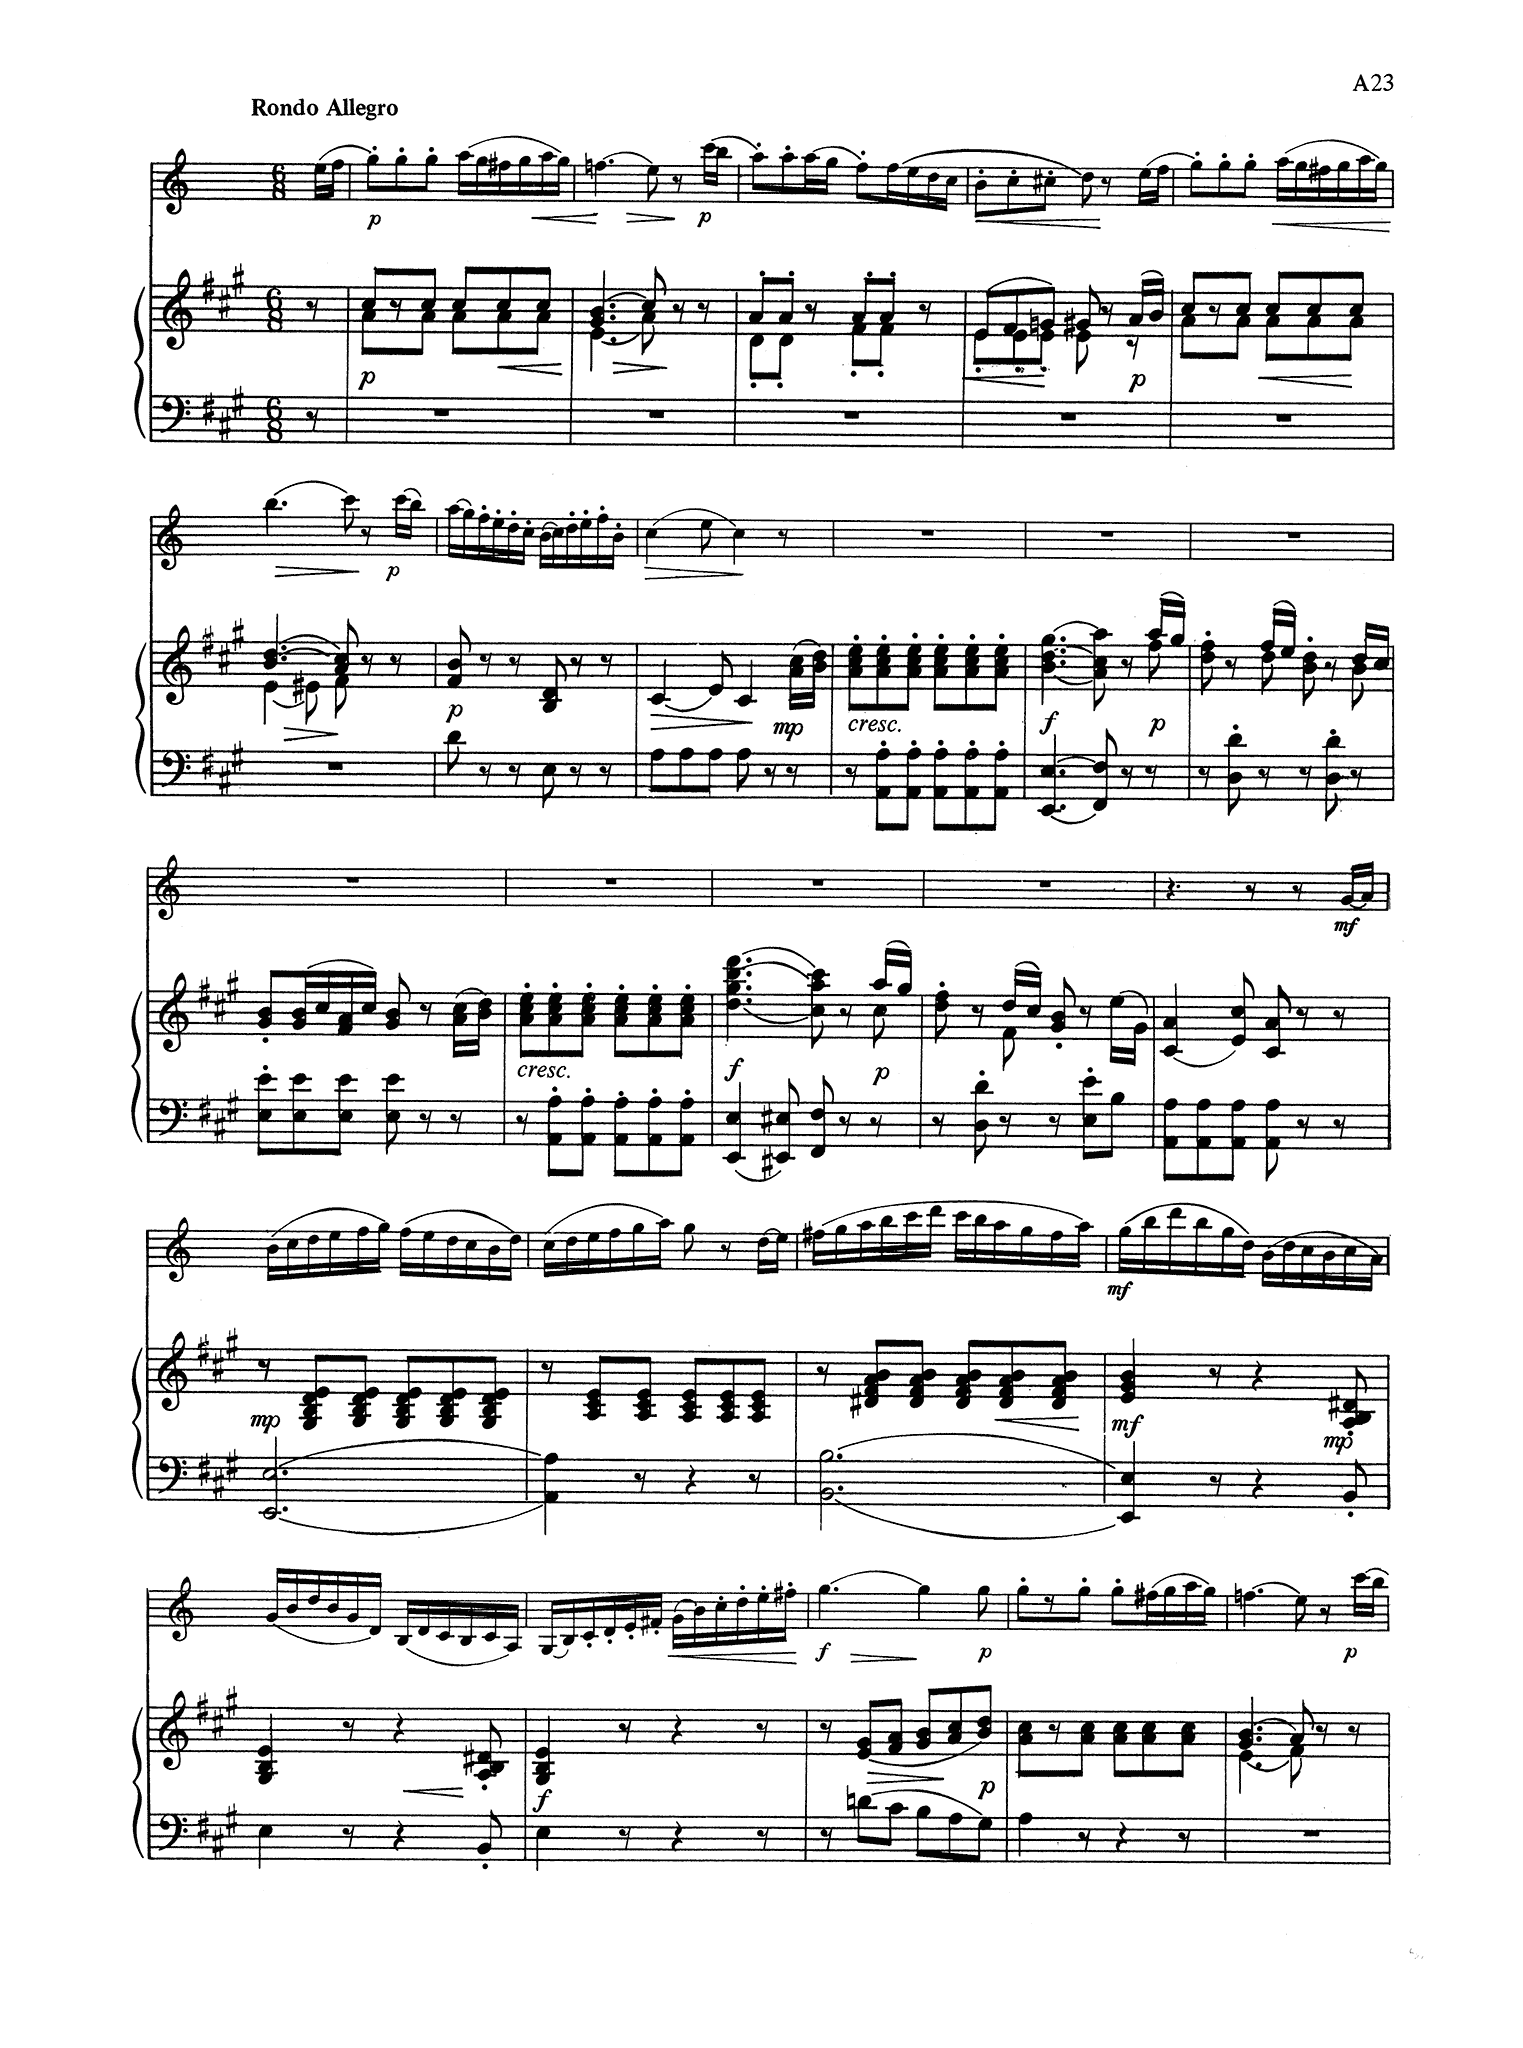 Clarinet Concerto in A Major, K. 622 - Movement 3